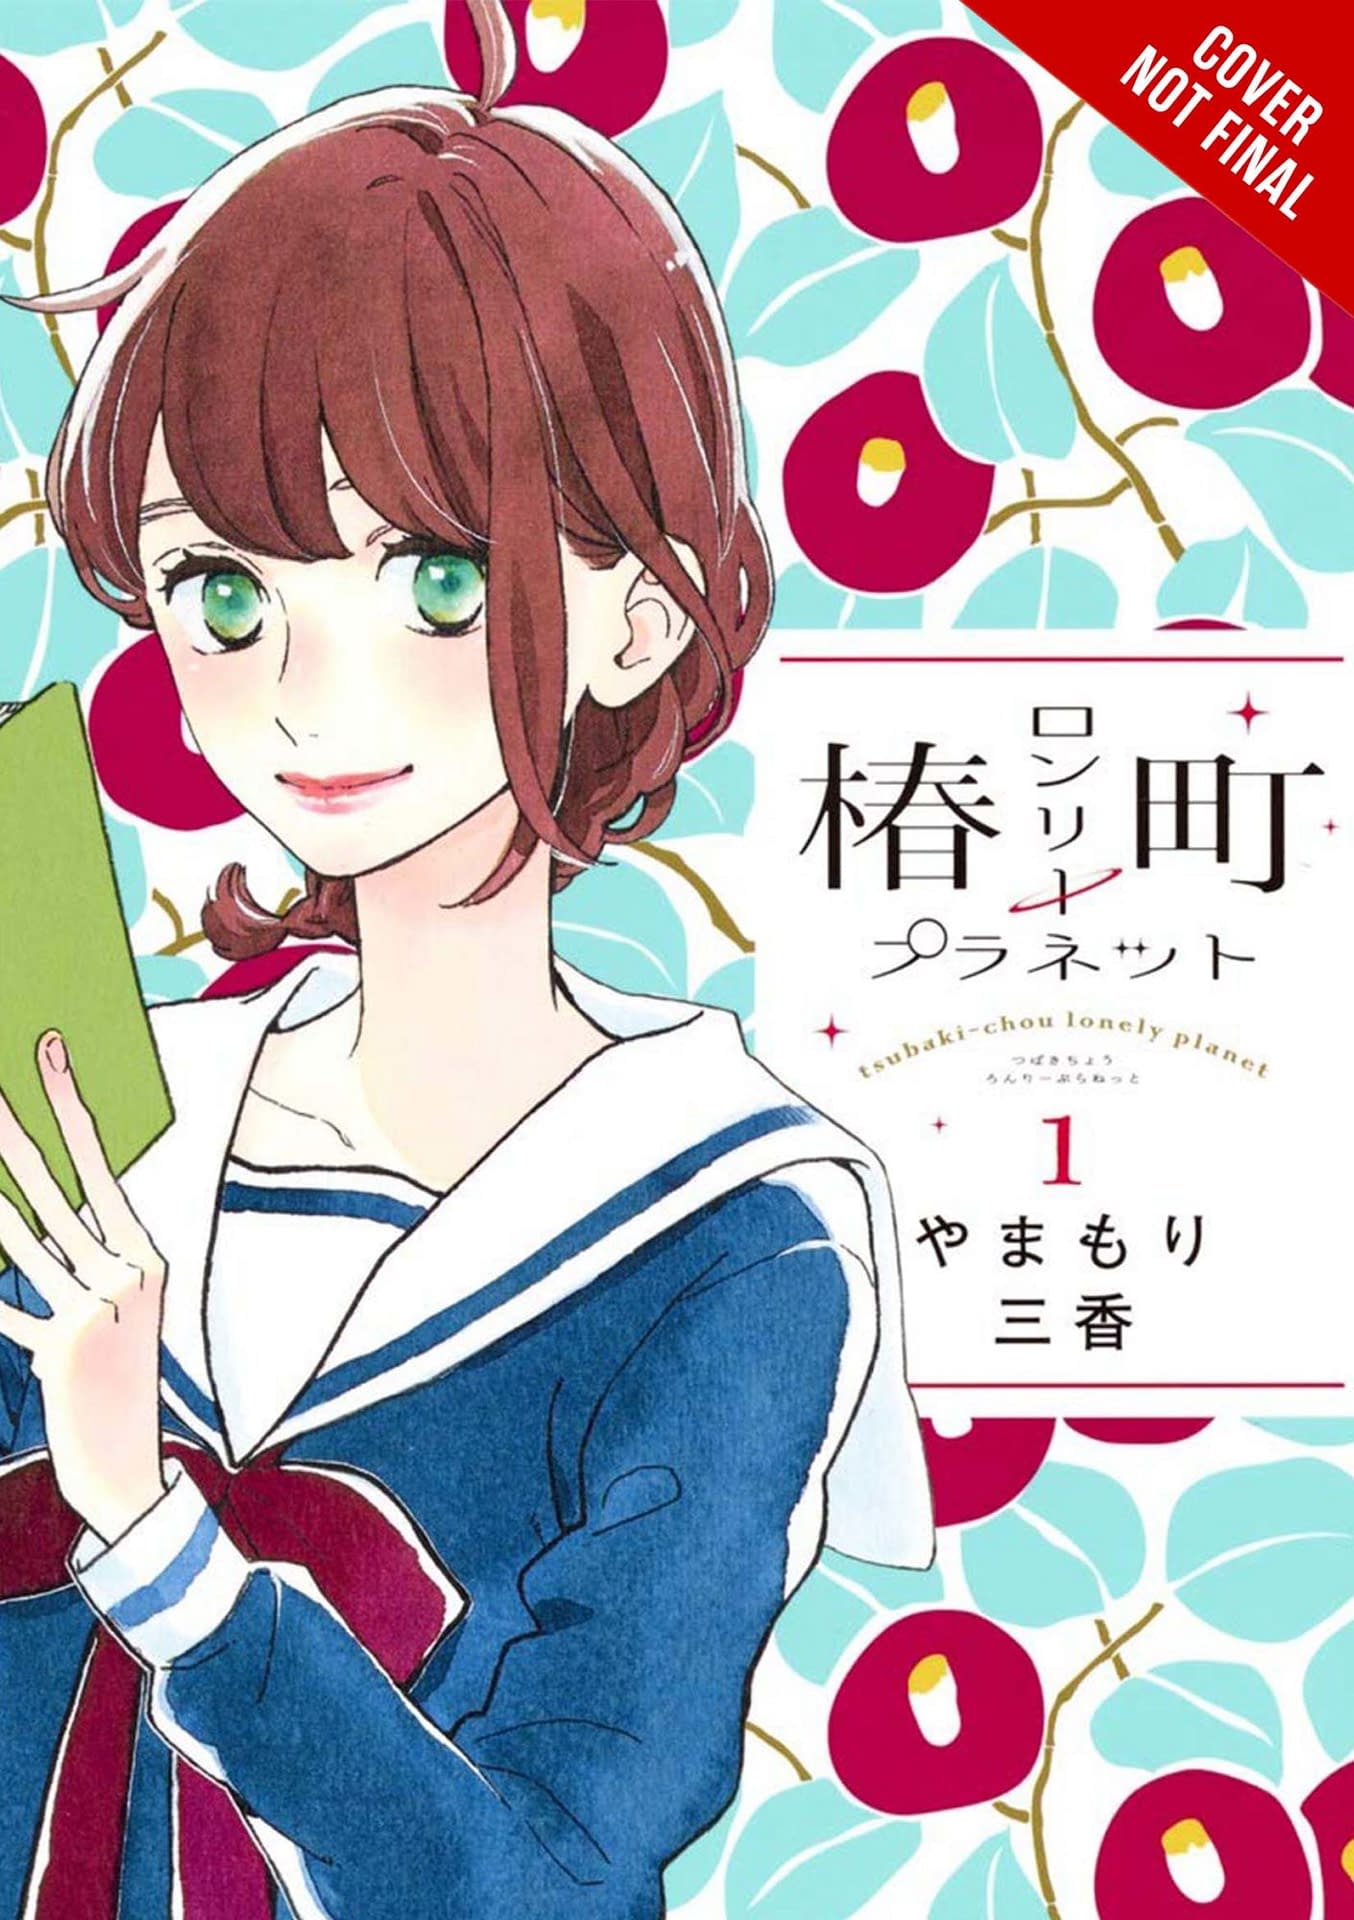 Yen Press Announces 8 New Manga and Light Novel Titles for July 2022